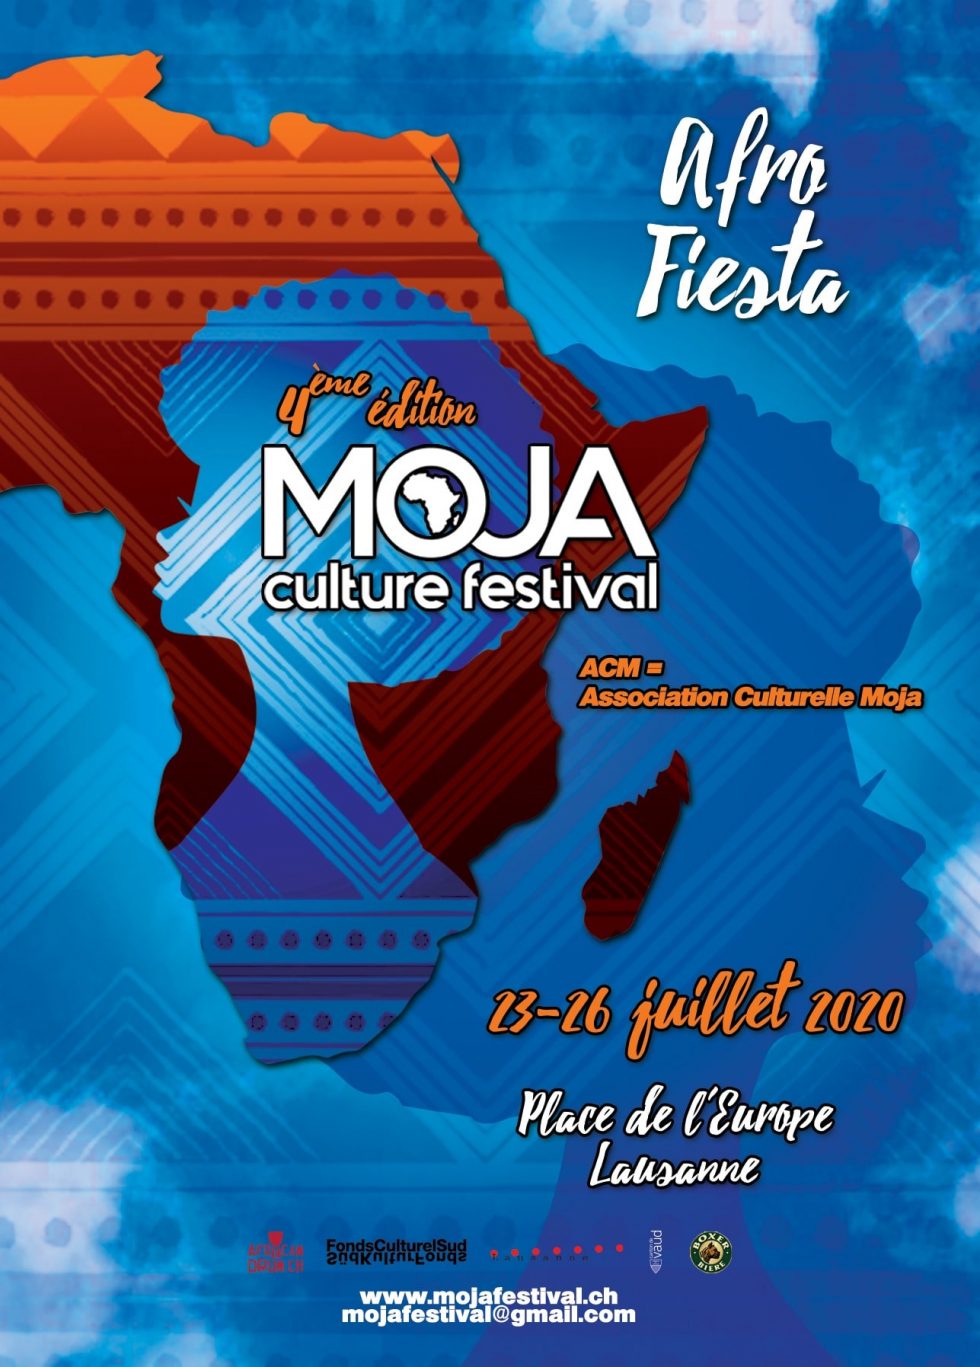 MOJA Culture Festival Accueil